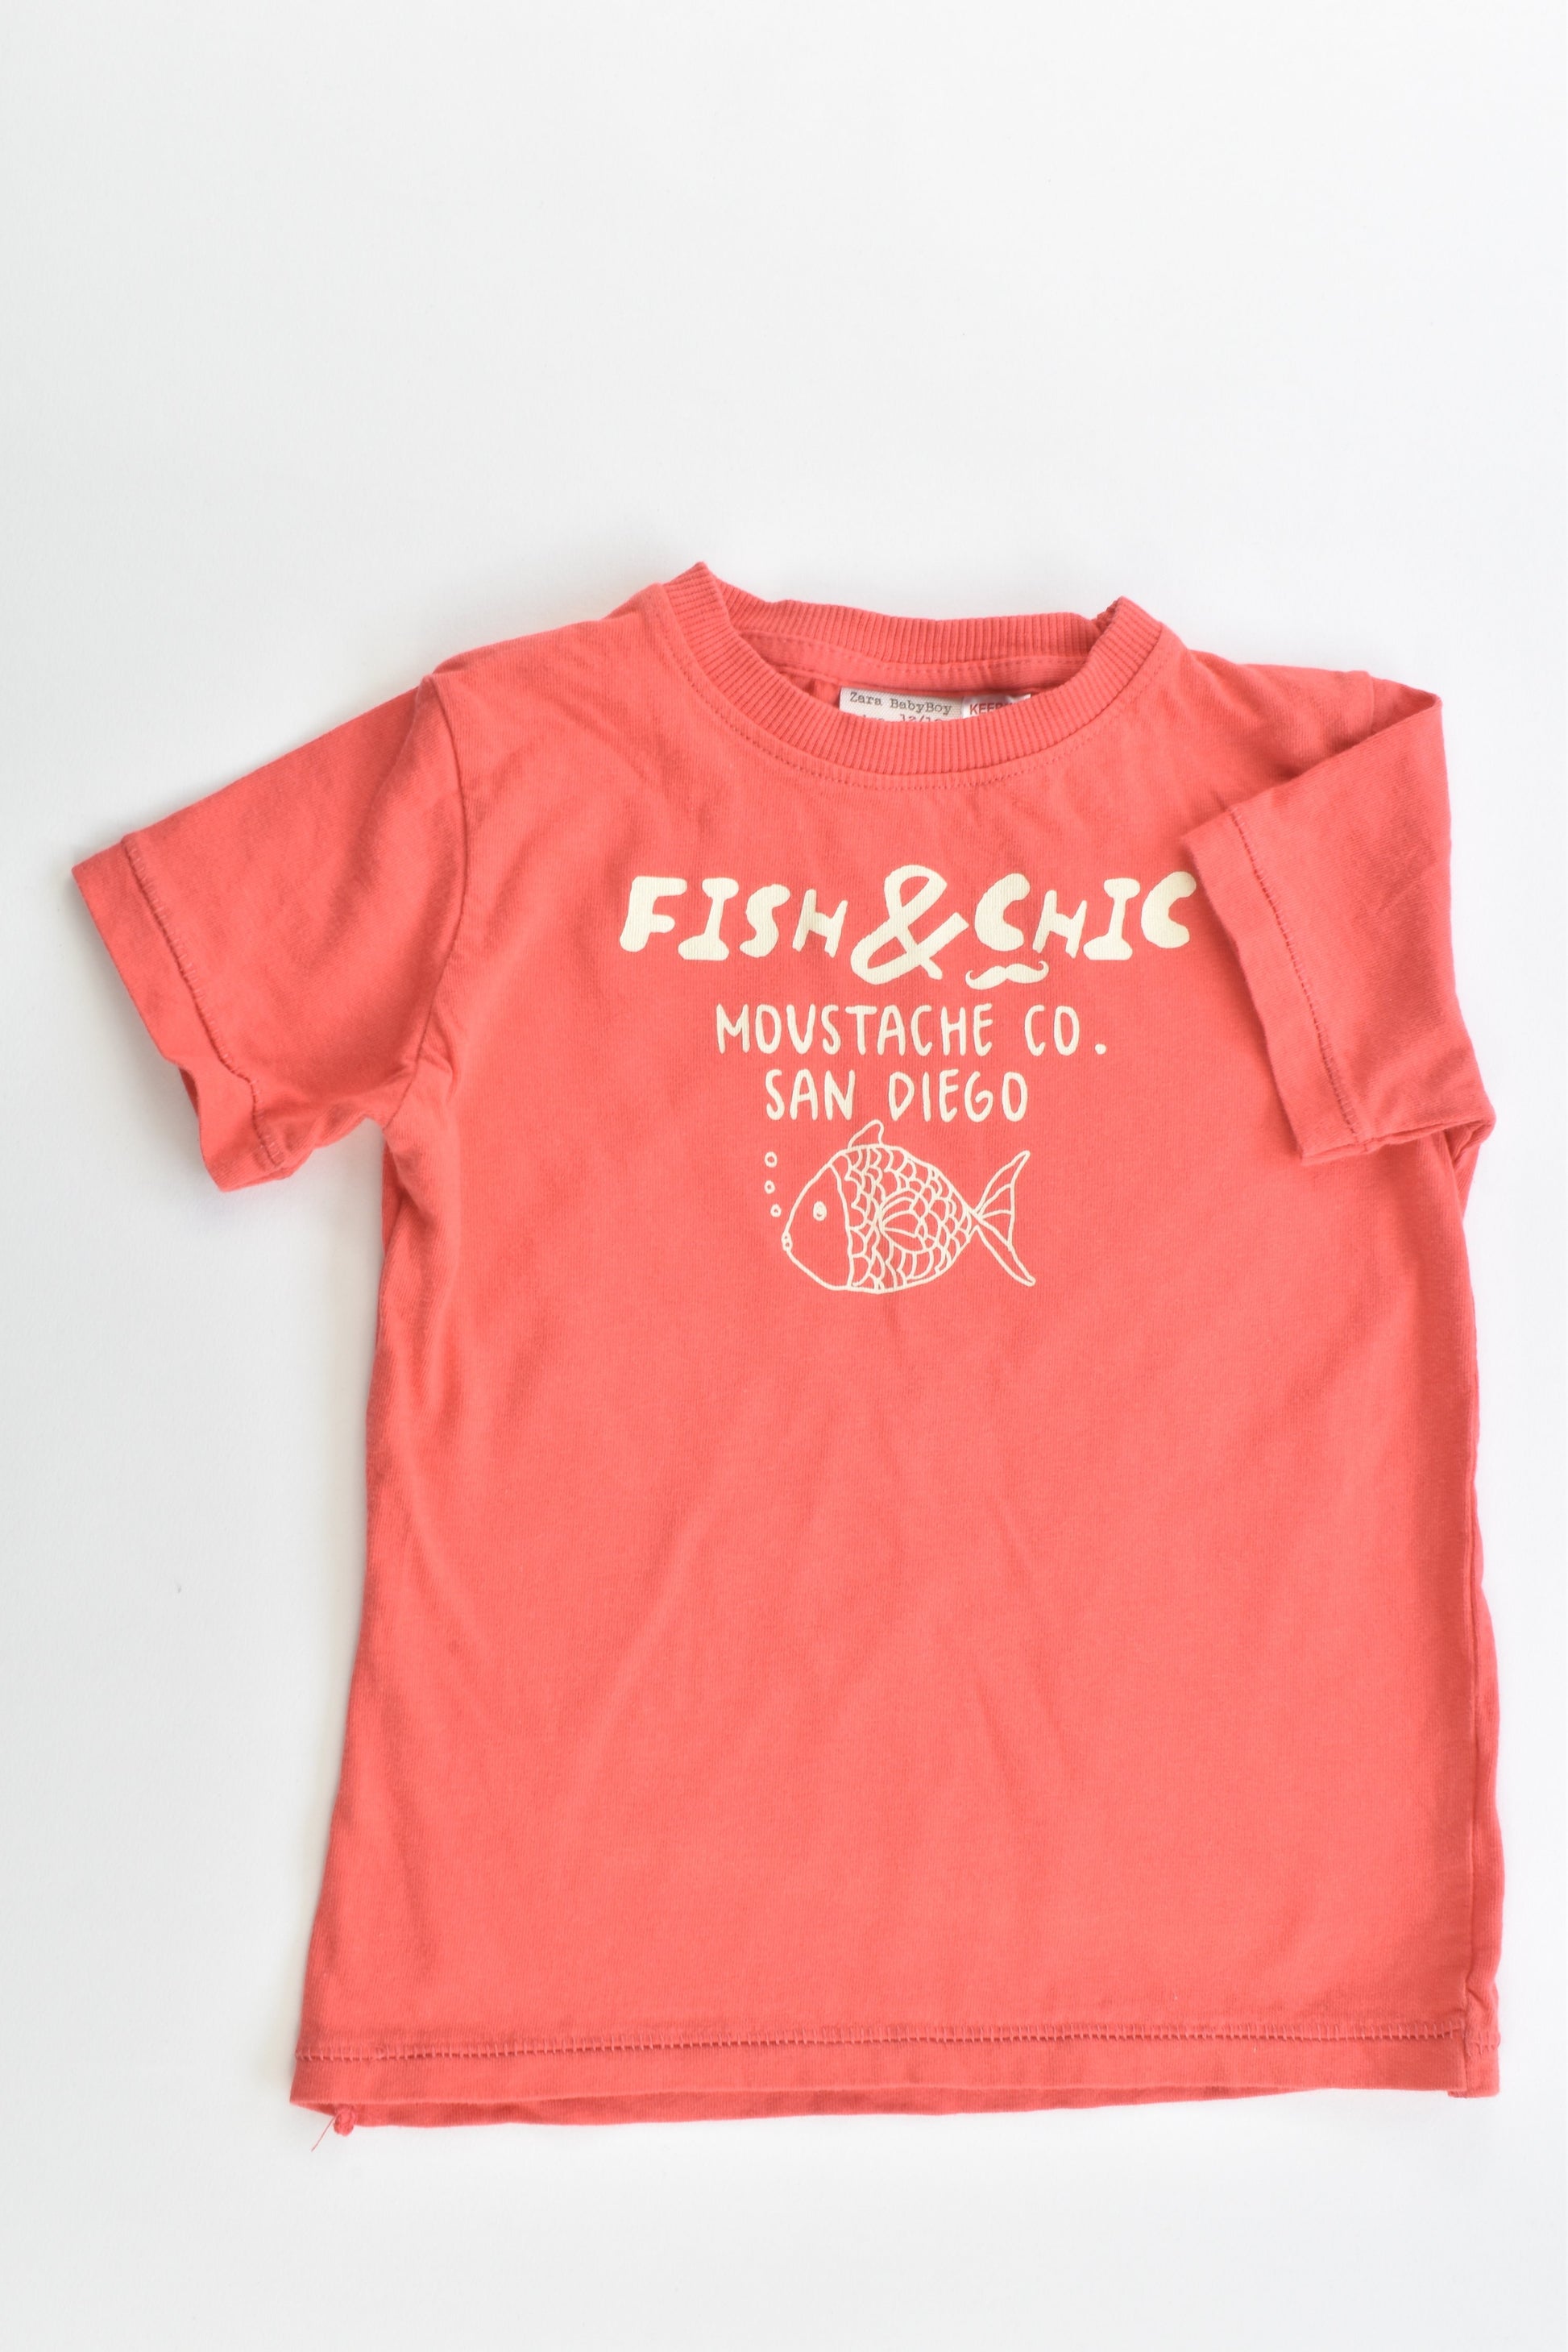 Zara Size 1 (12/18 months, 86 cm) Fish and Moustache T-shirt